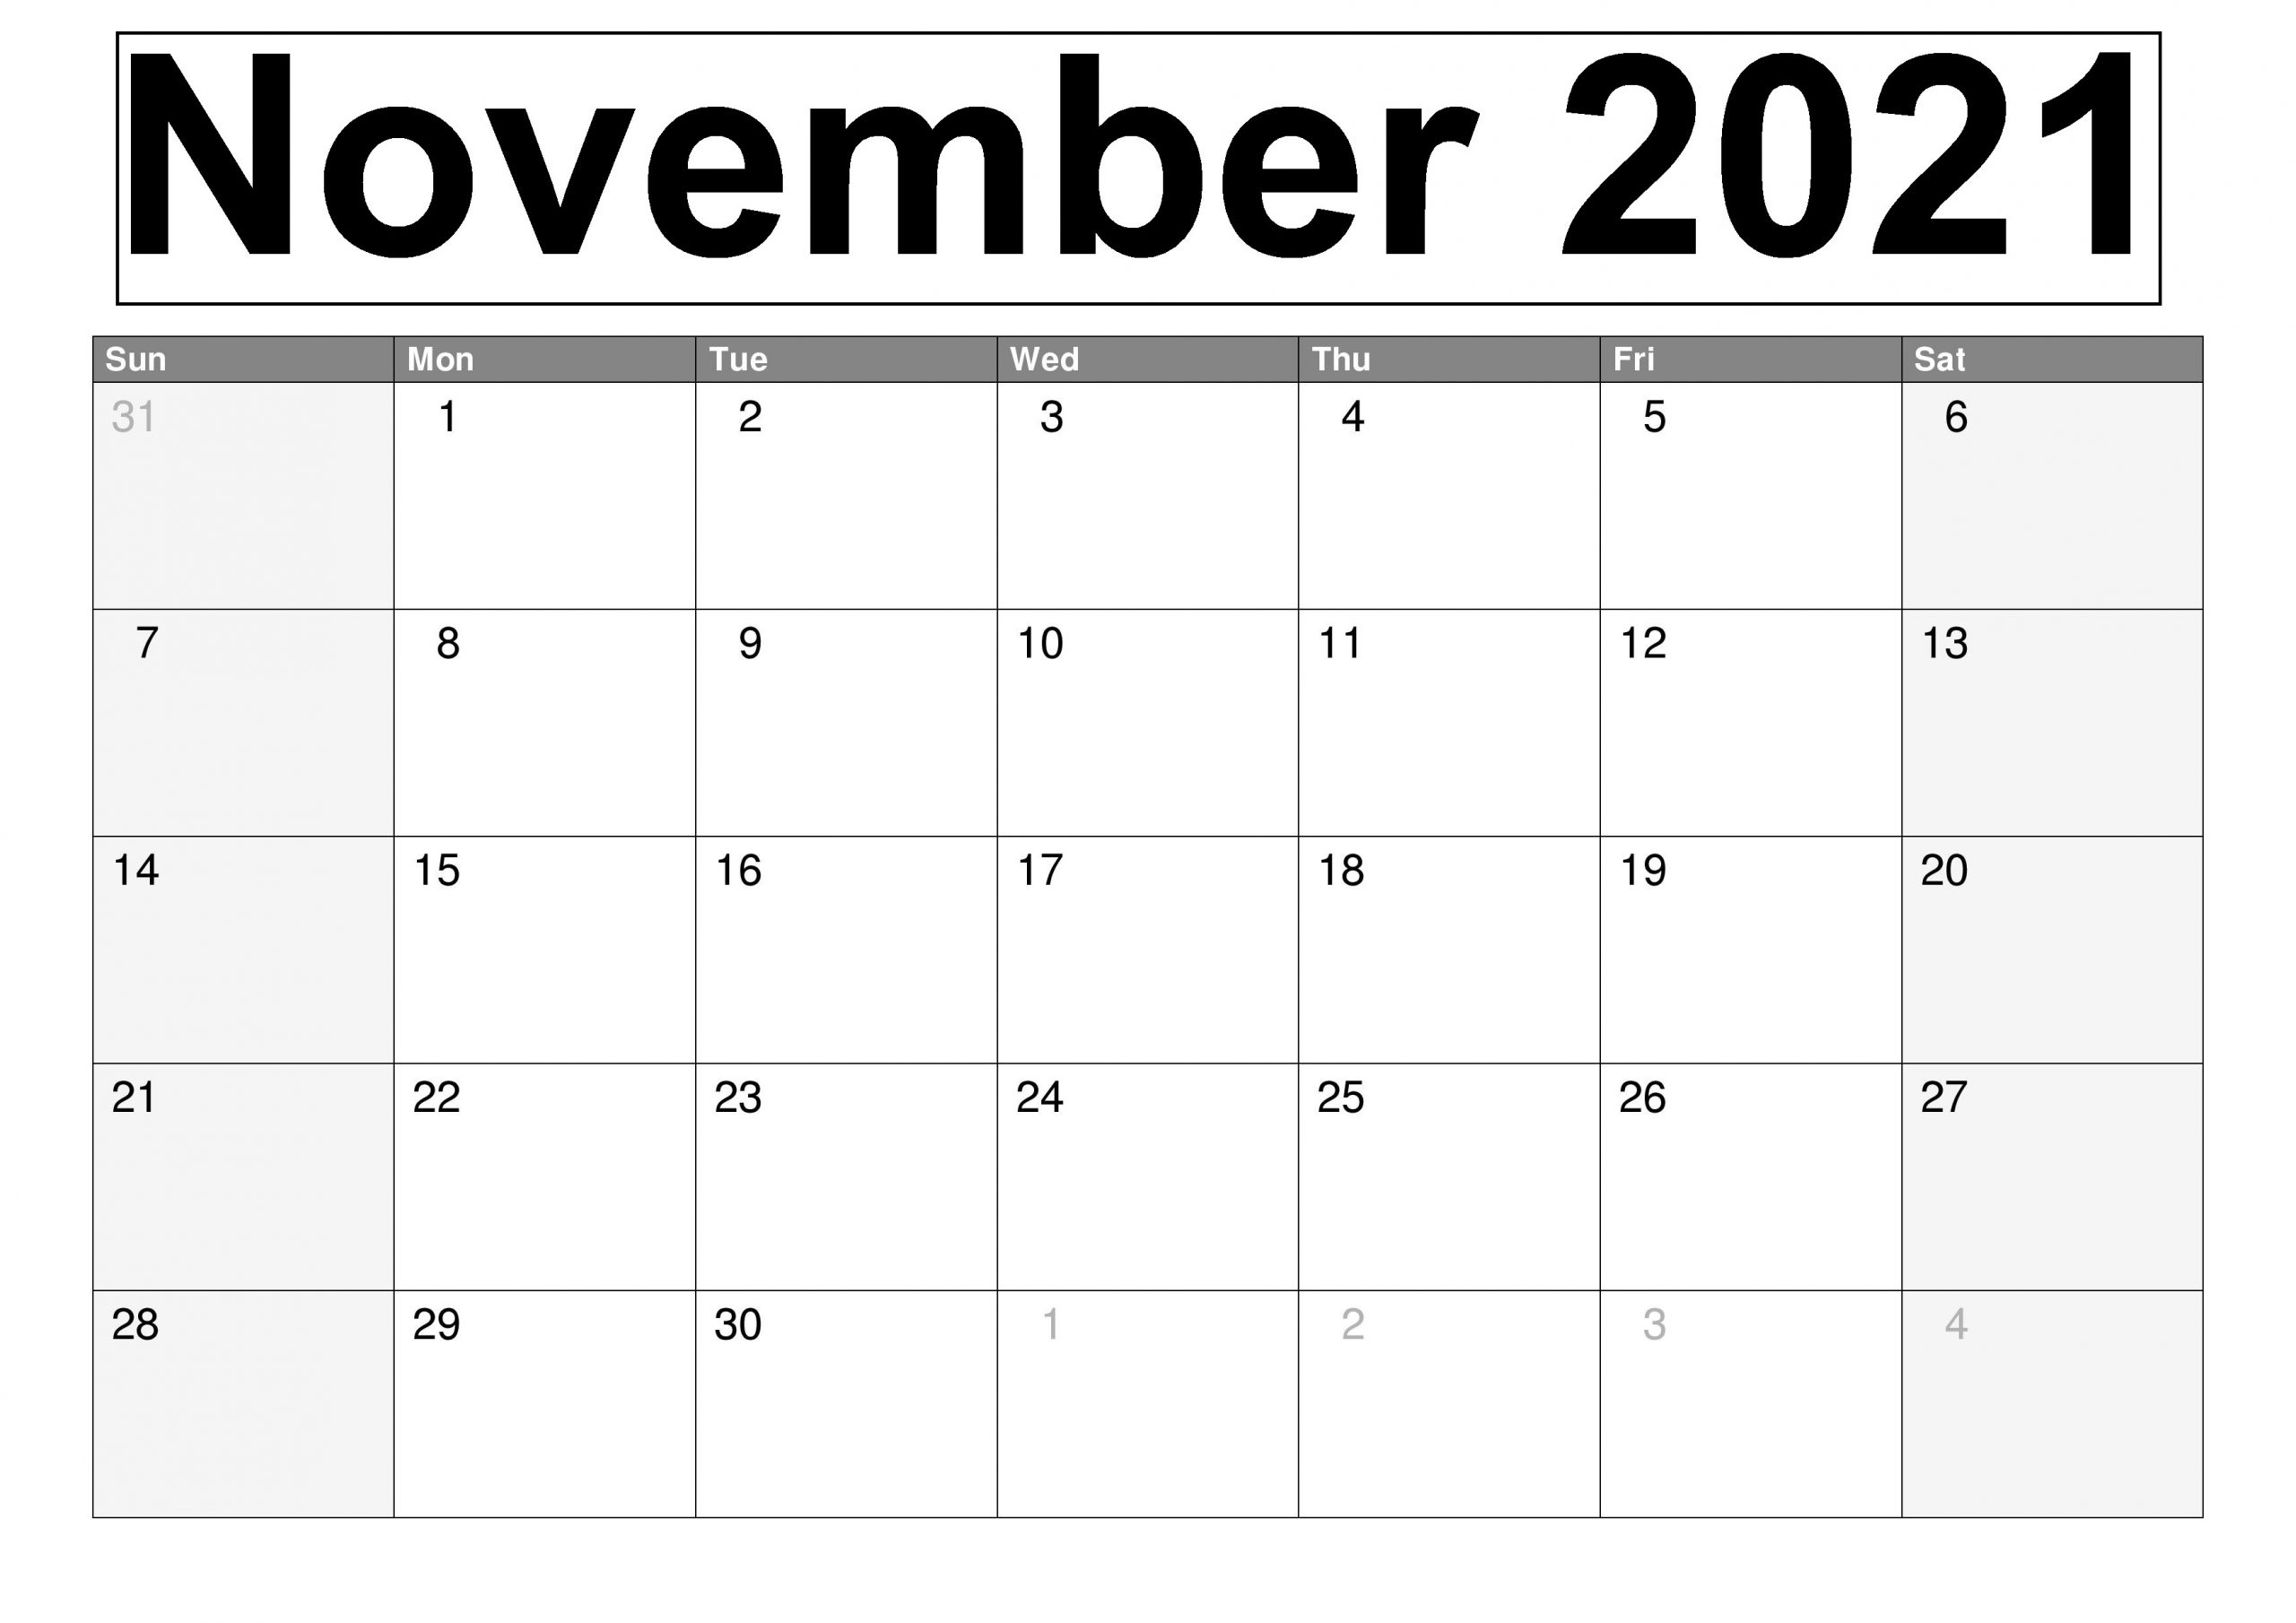 November 2021 Calendar Kalnirnay